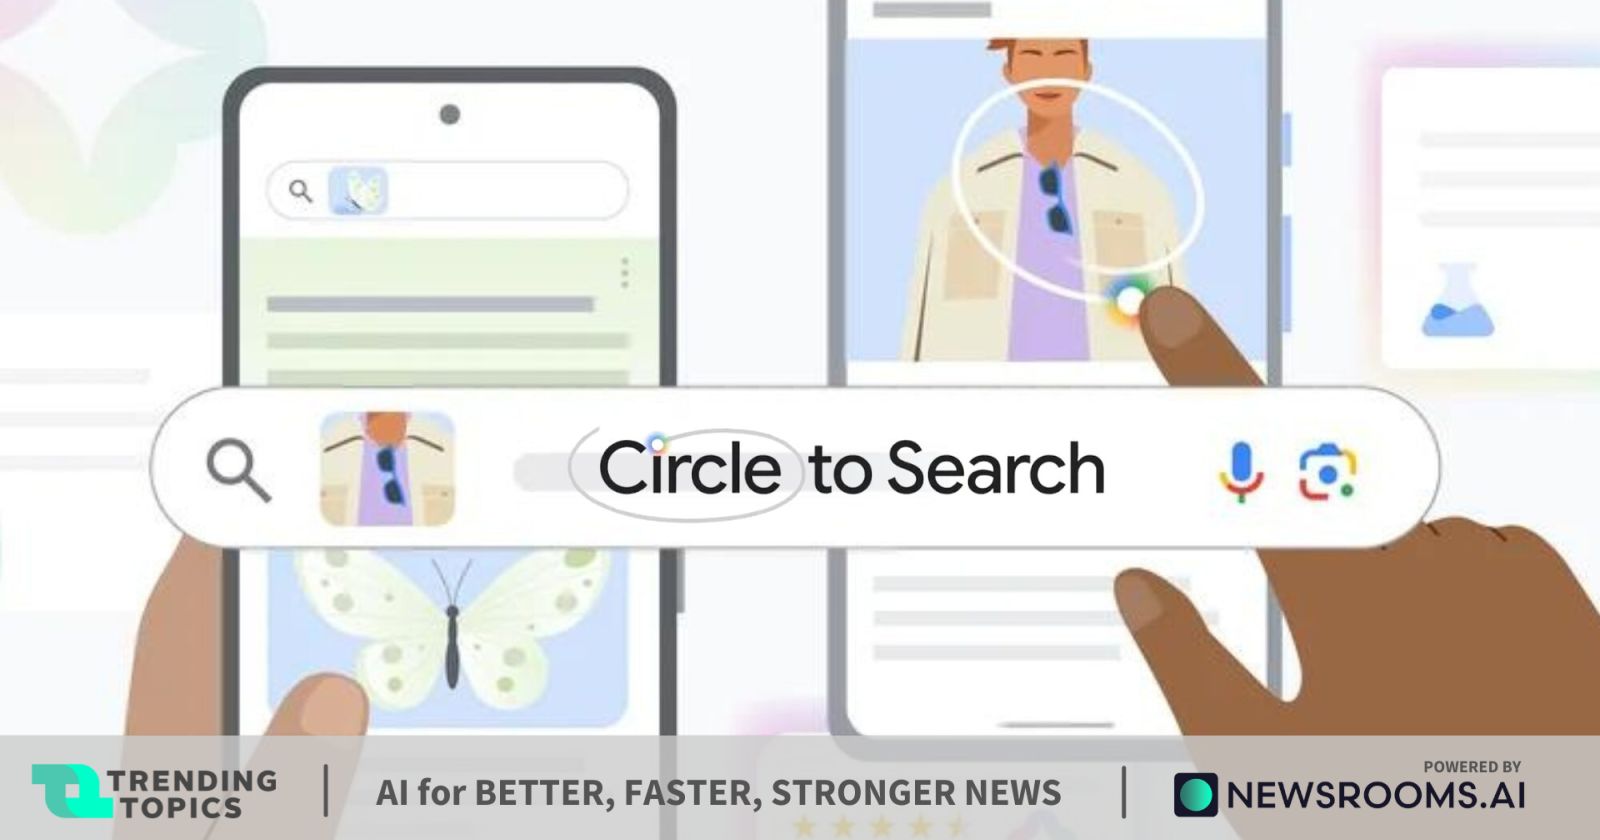 Search Circle: Google's revolution in mobile search